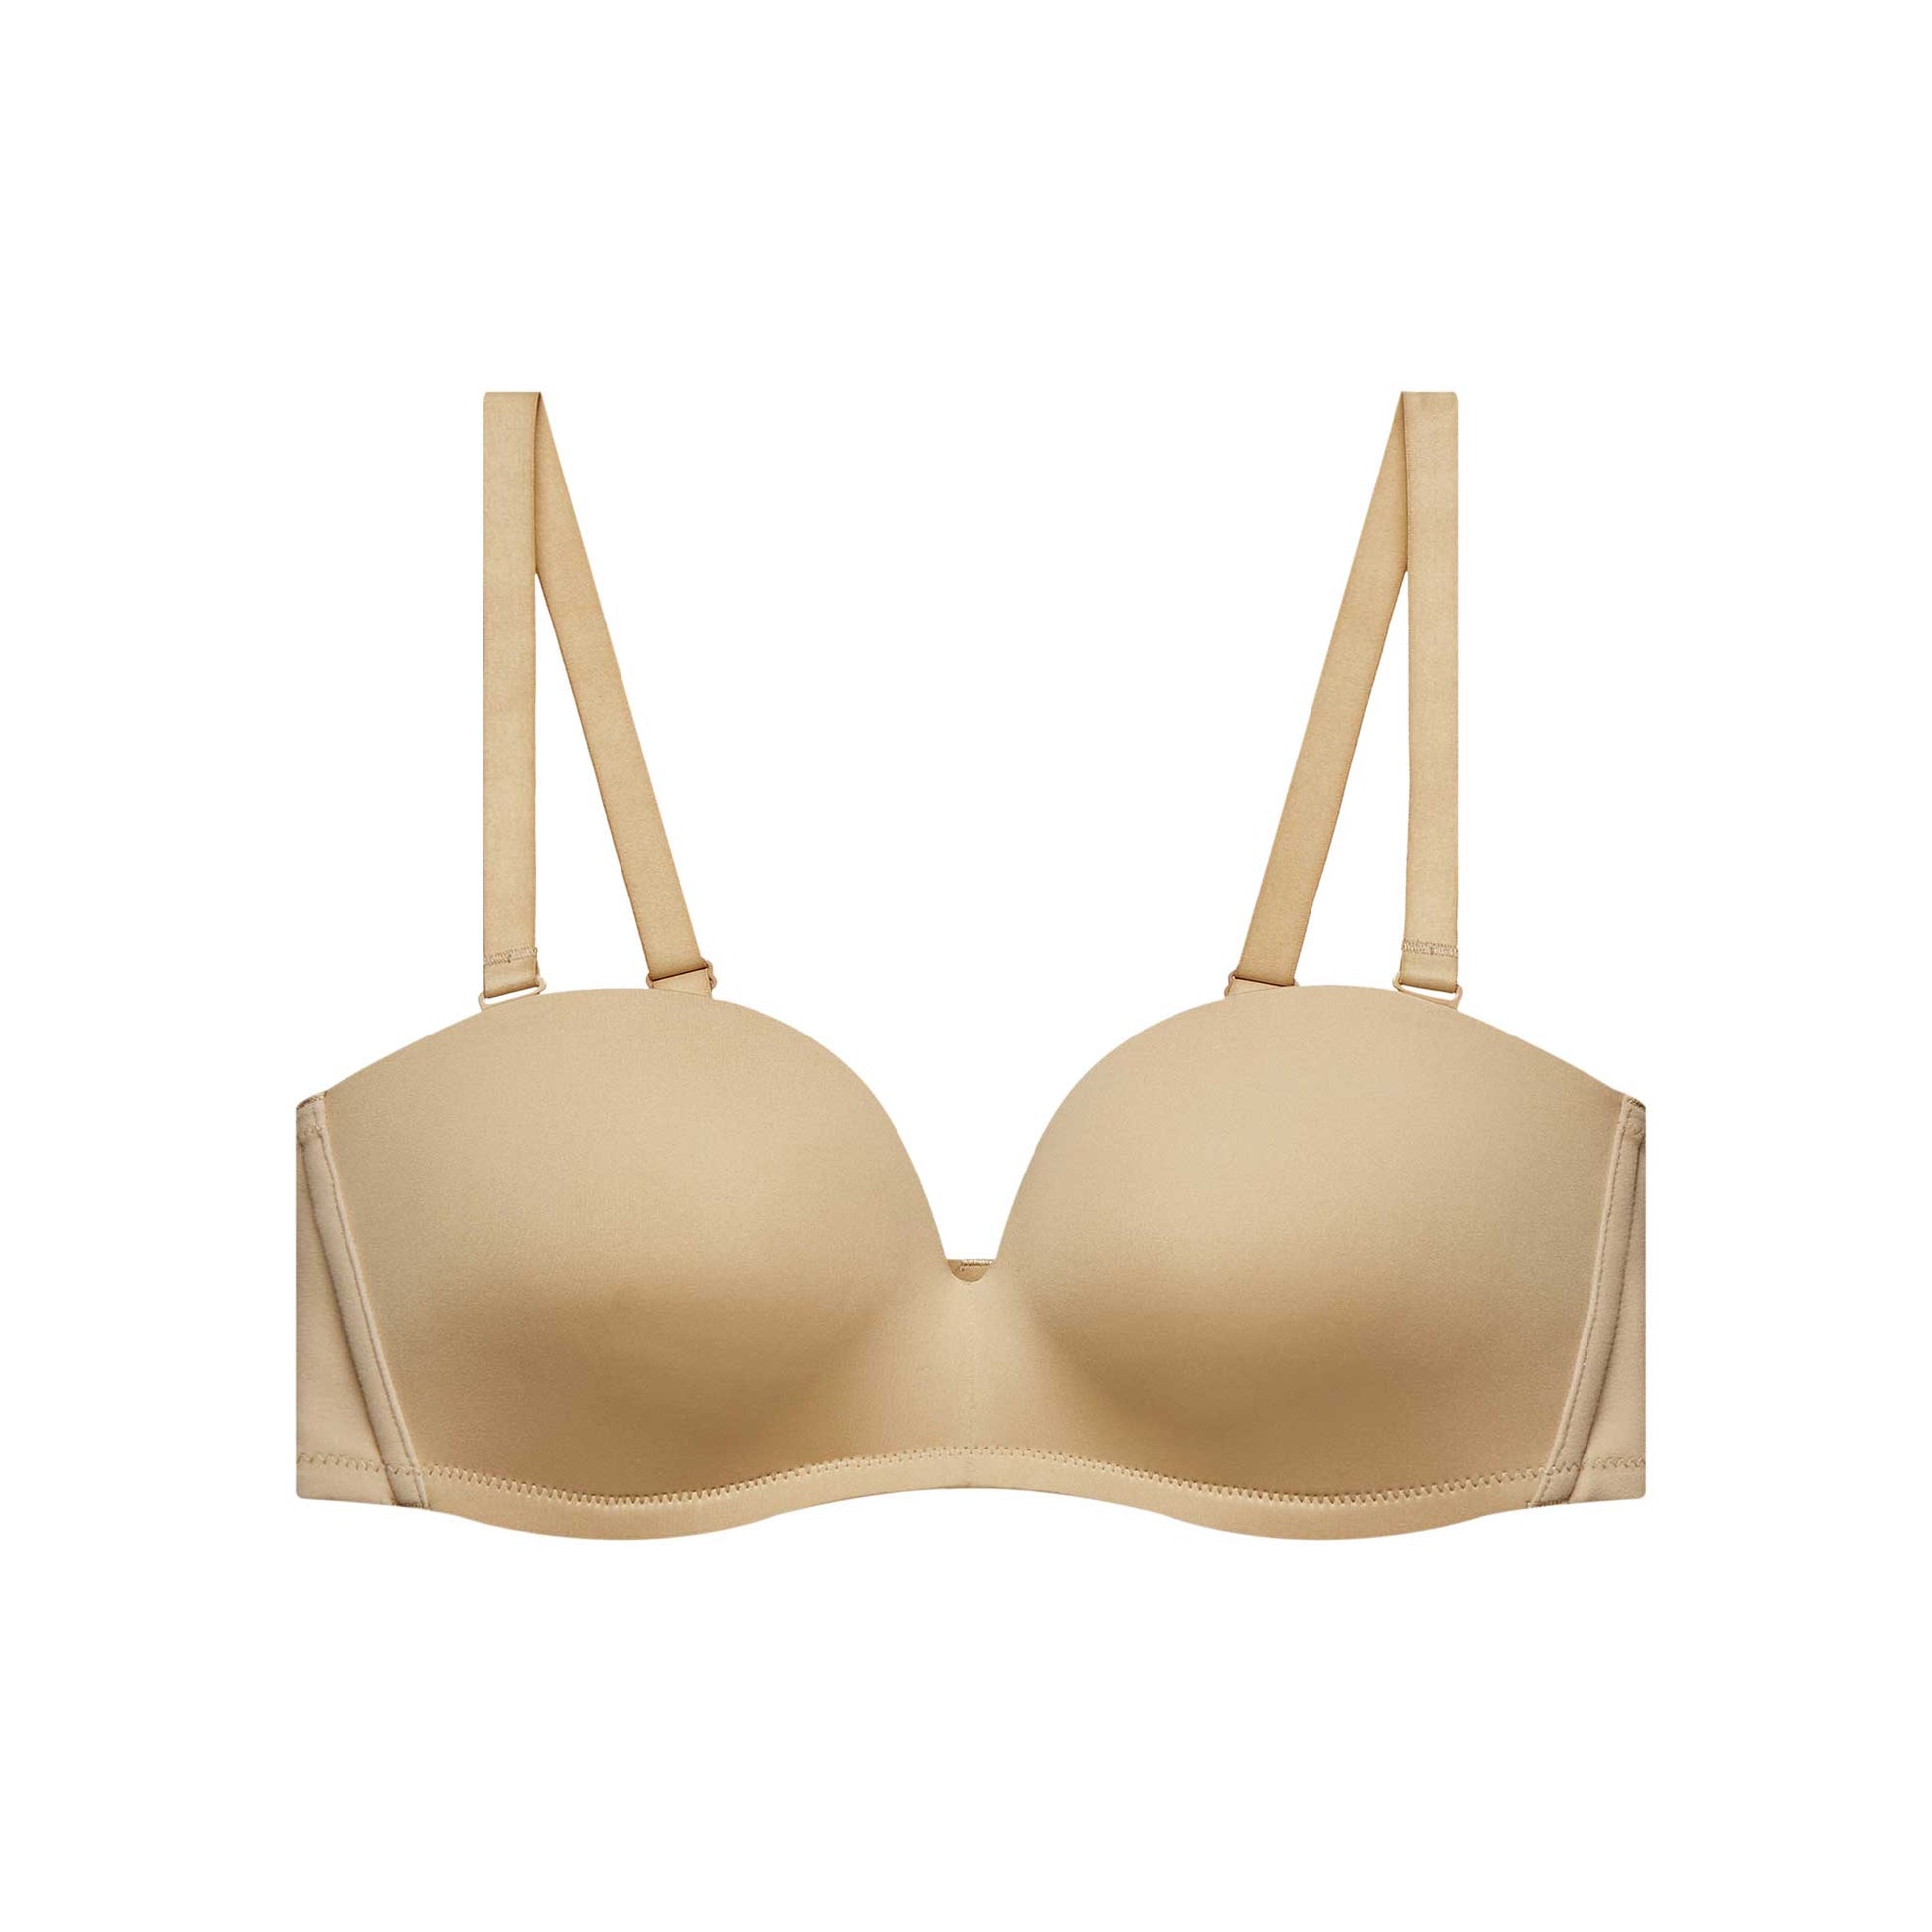 image of tan bra